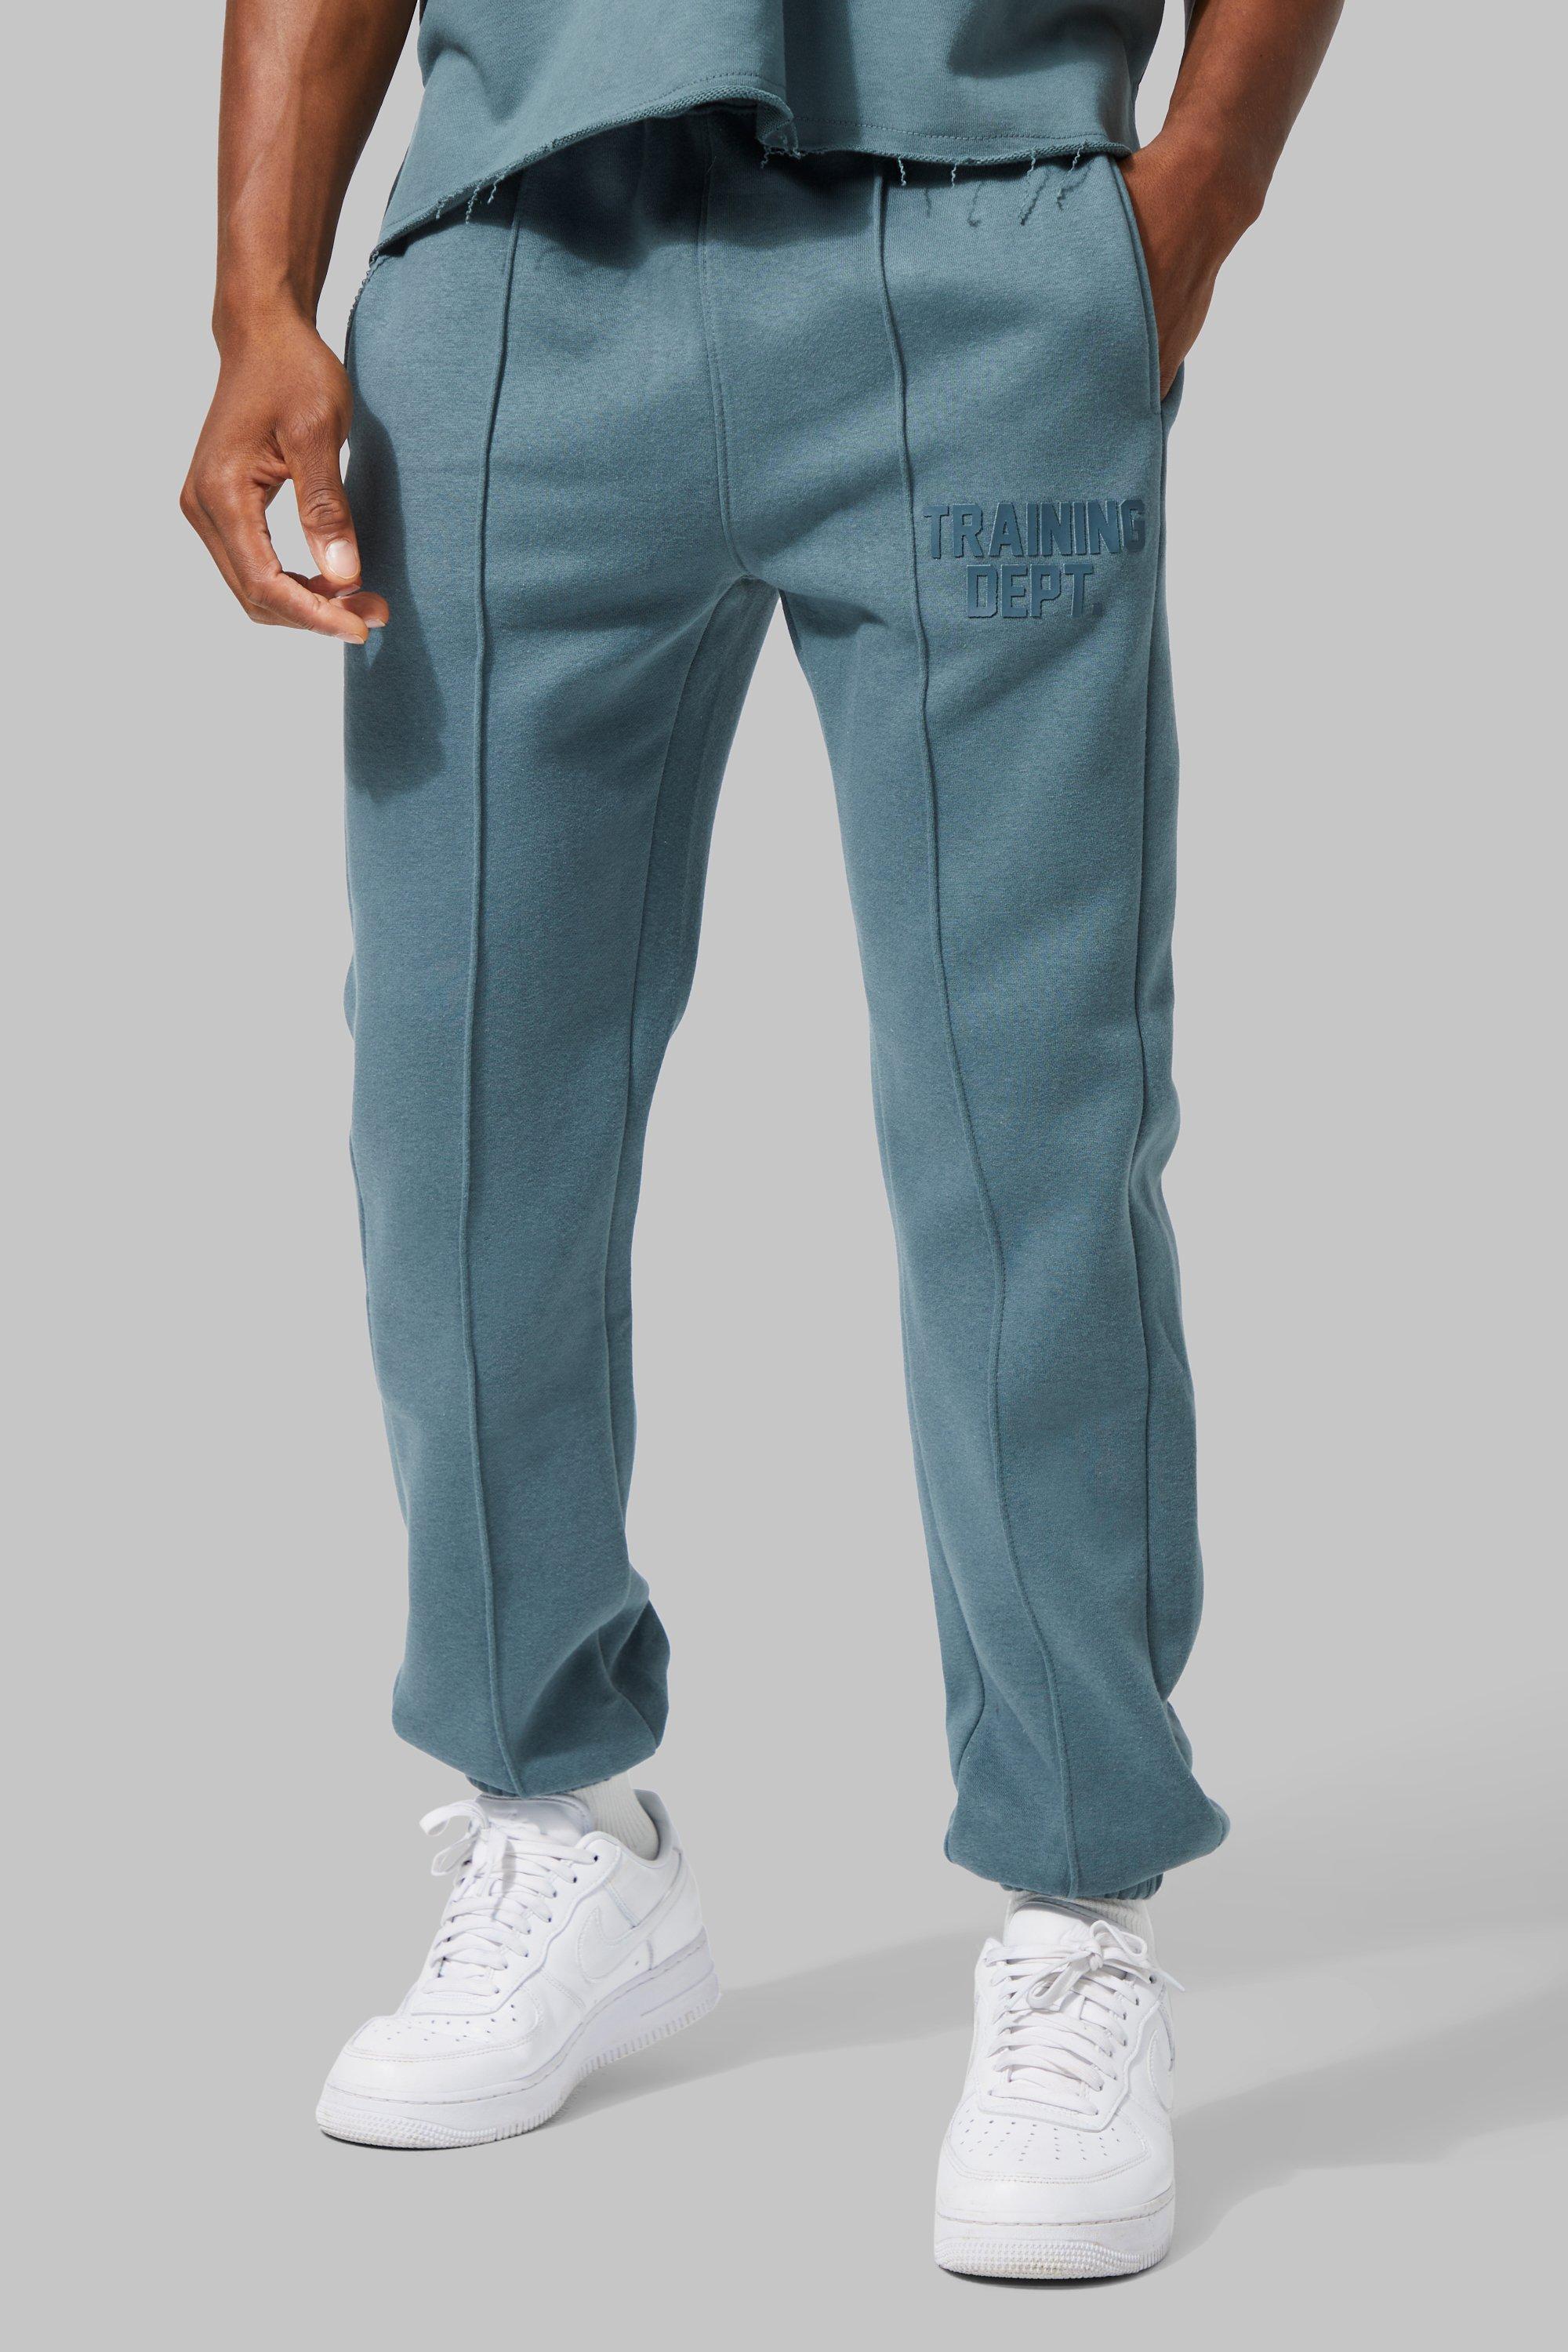 Image of Pantaloni tuta Active Training Dept Slim Fit, Azzurro